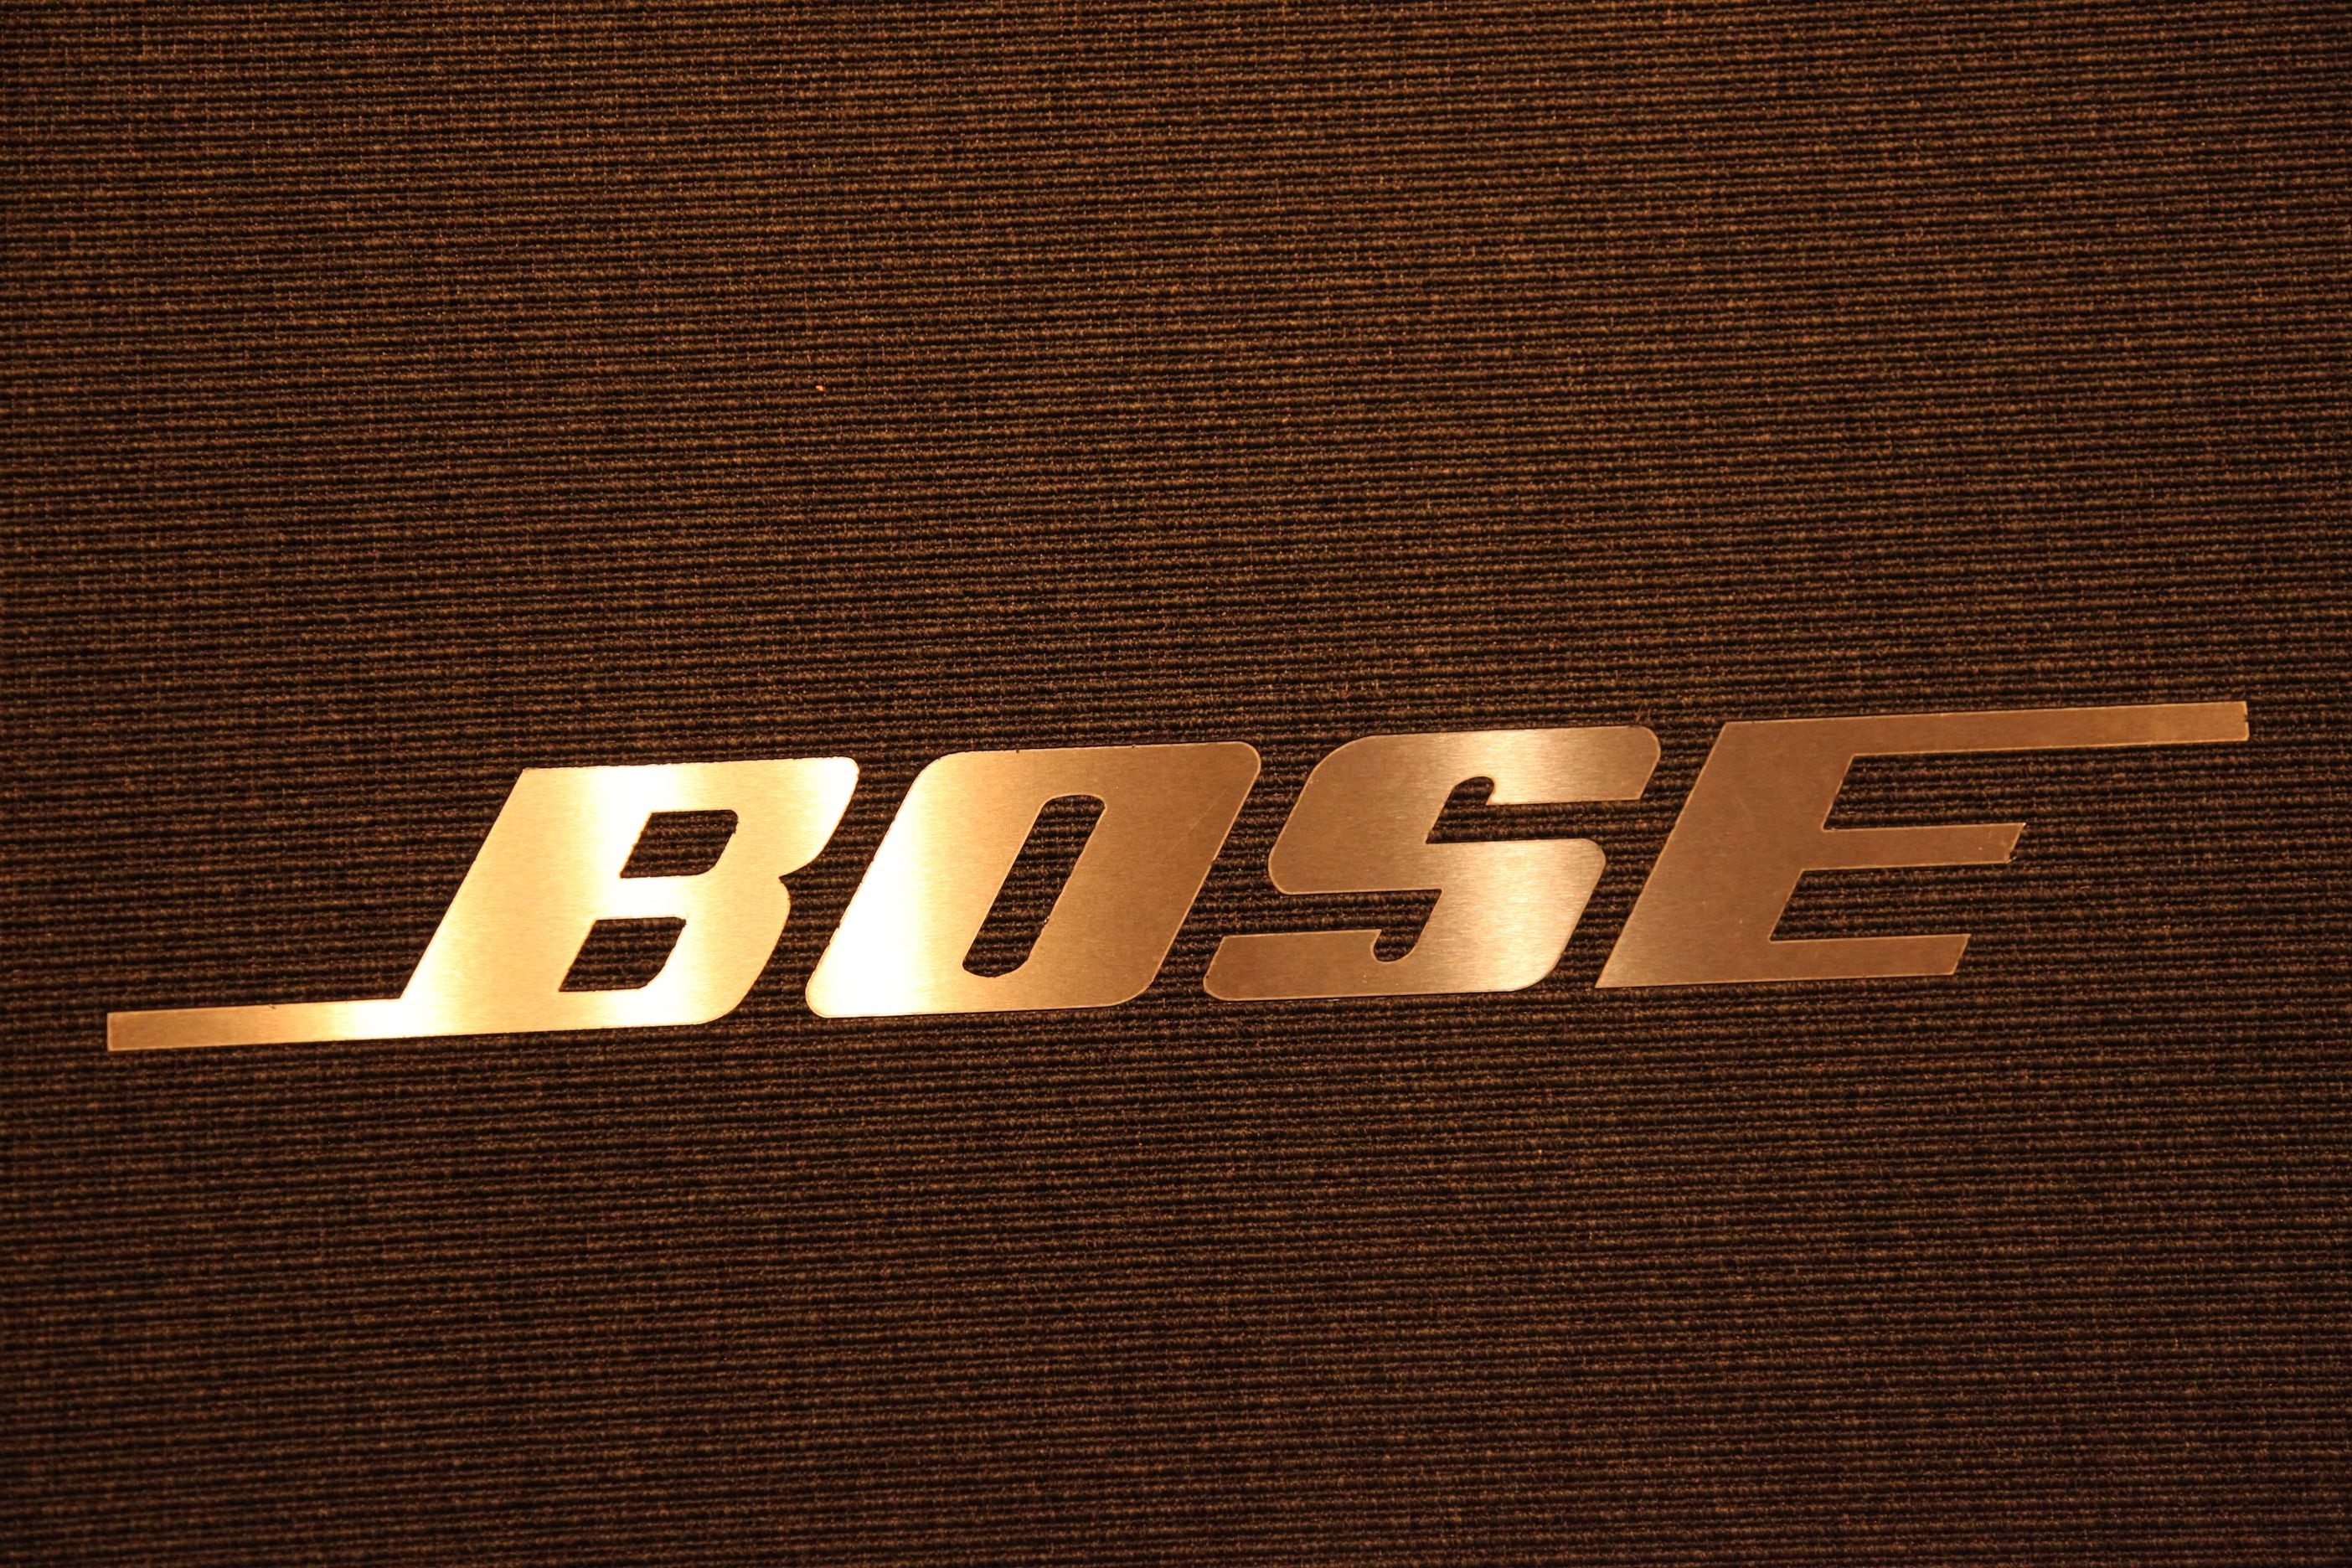 Bose allegedly tracks information sells it - SoundGuys